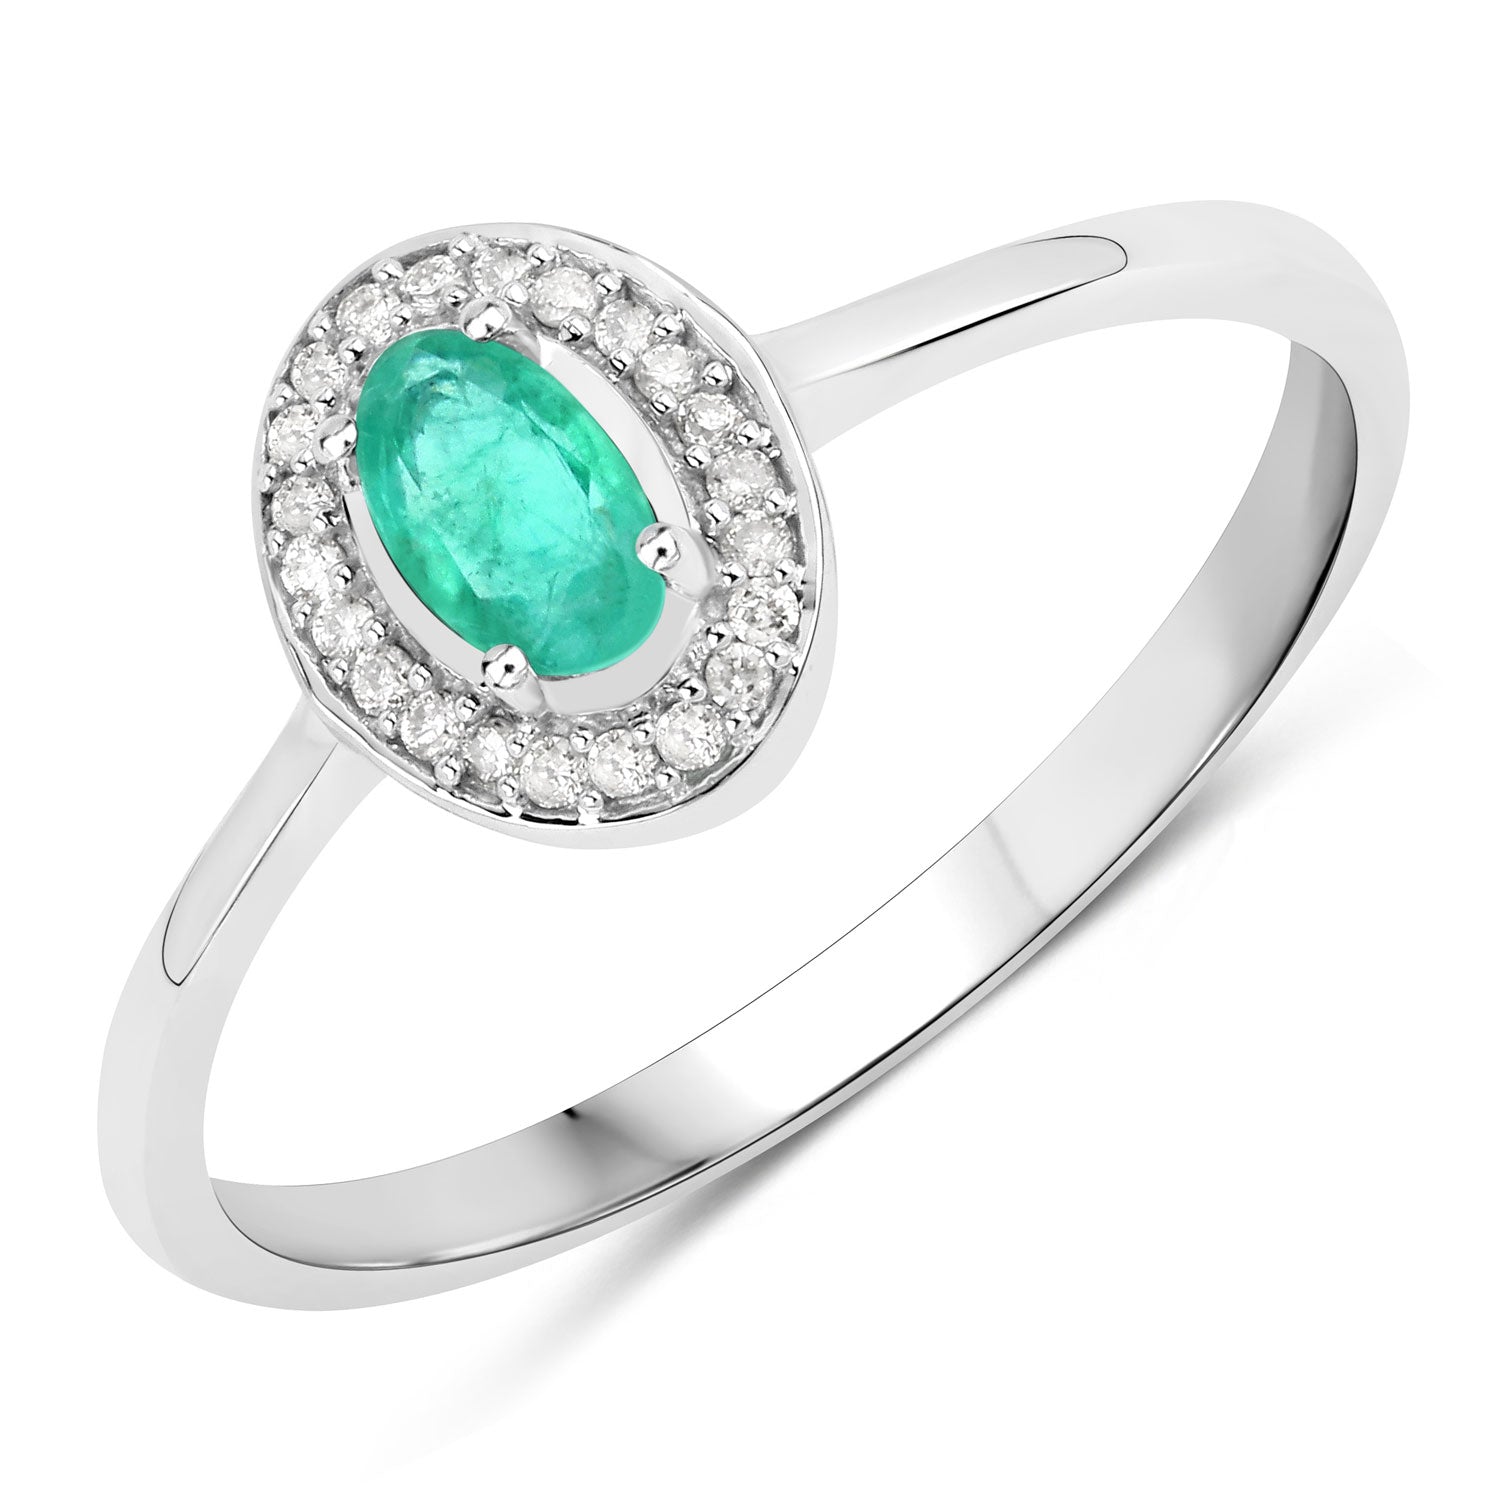 0.25 Carat Genuine Zambian Emerald and White Diamond 14K White Gold Ring